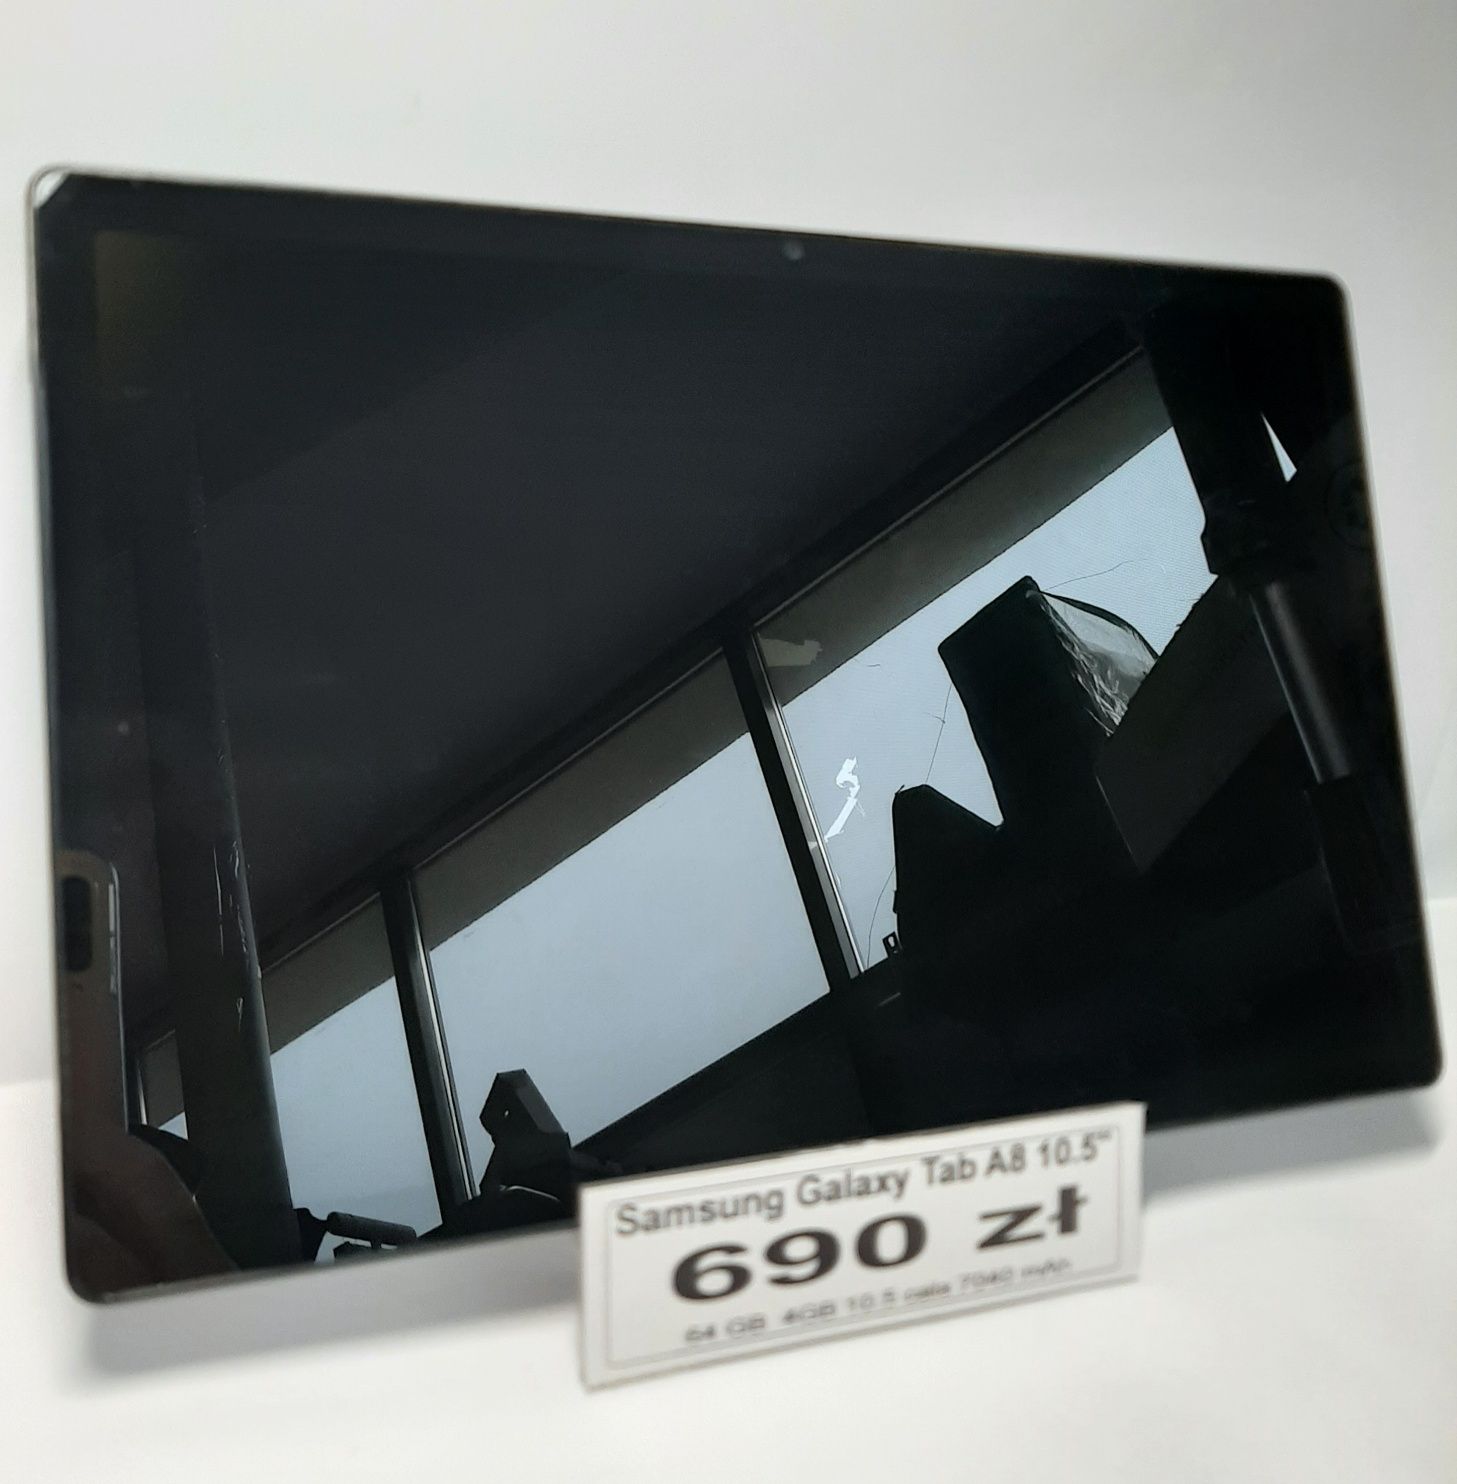 Samsumg Galaxy Tab A8 64Gb